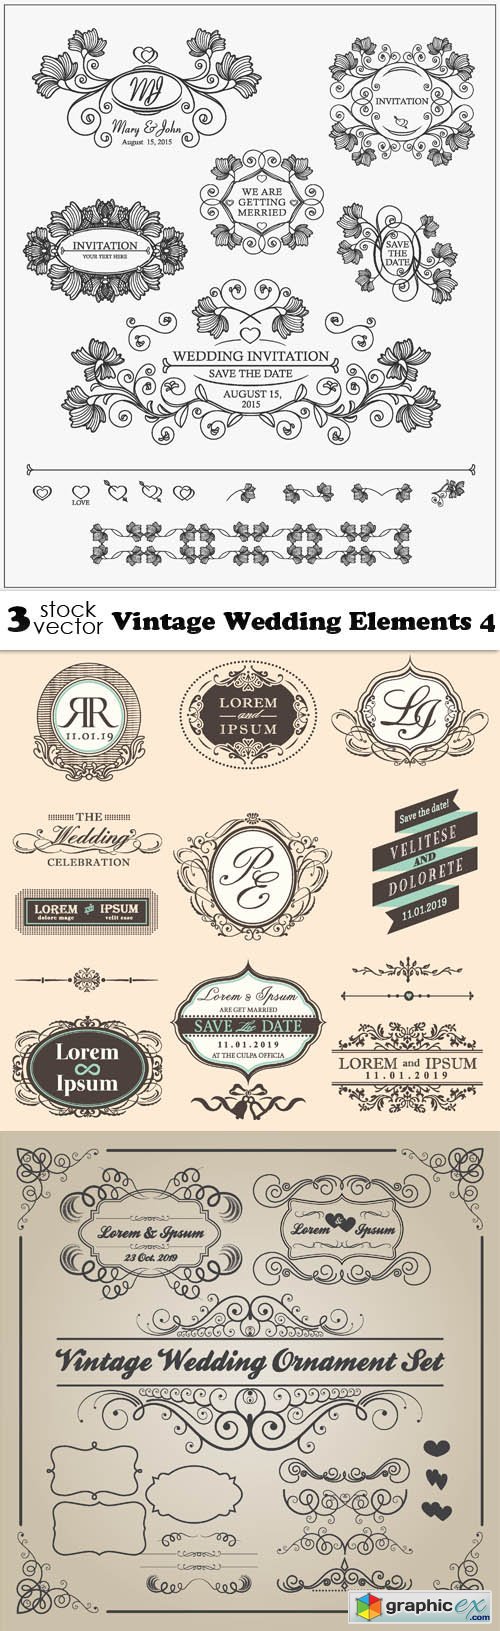 Vintage Wedding Elements 4